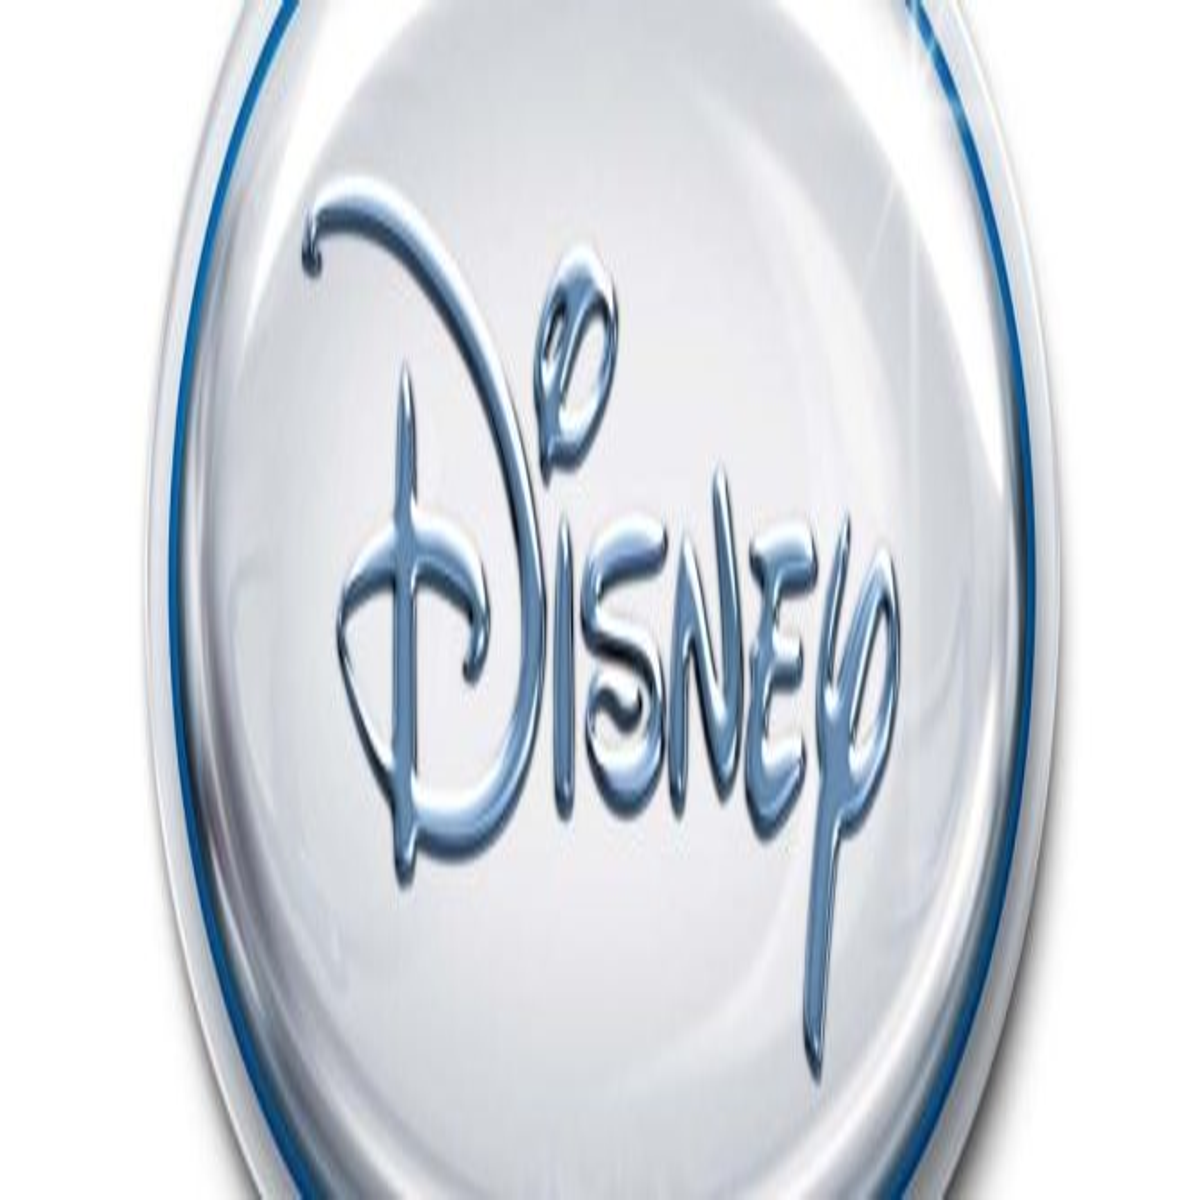 disney interactive studios logo